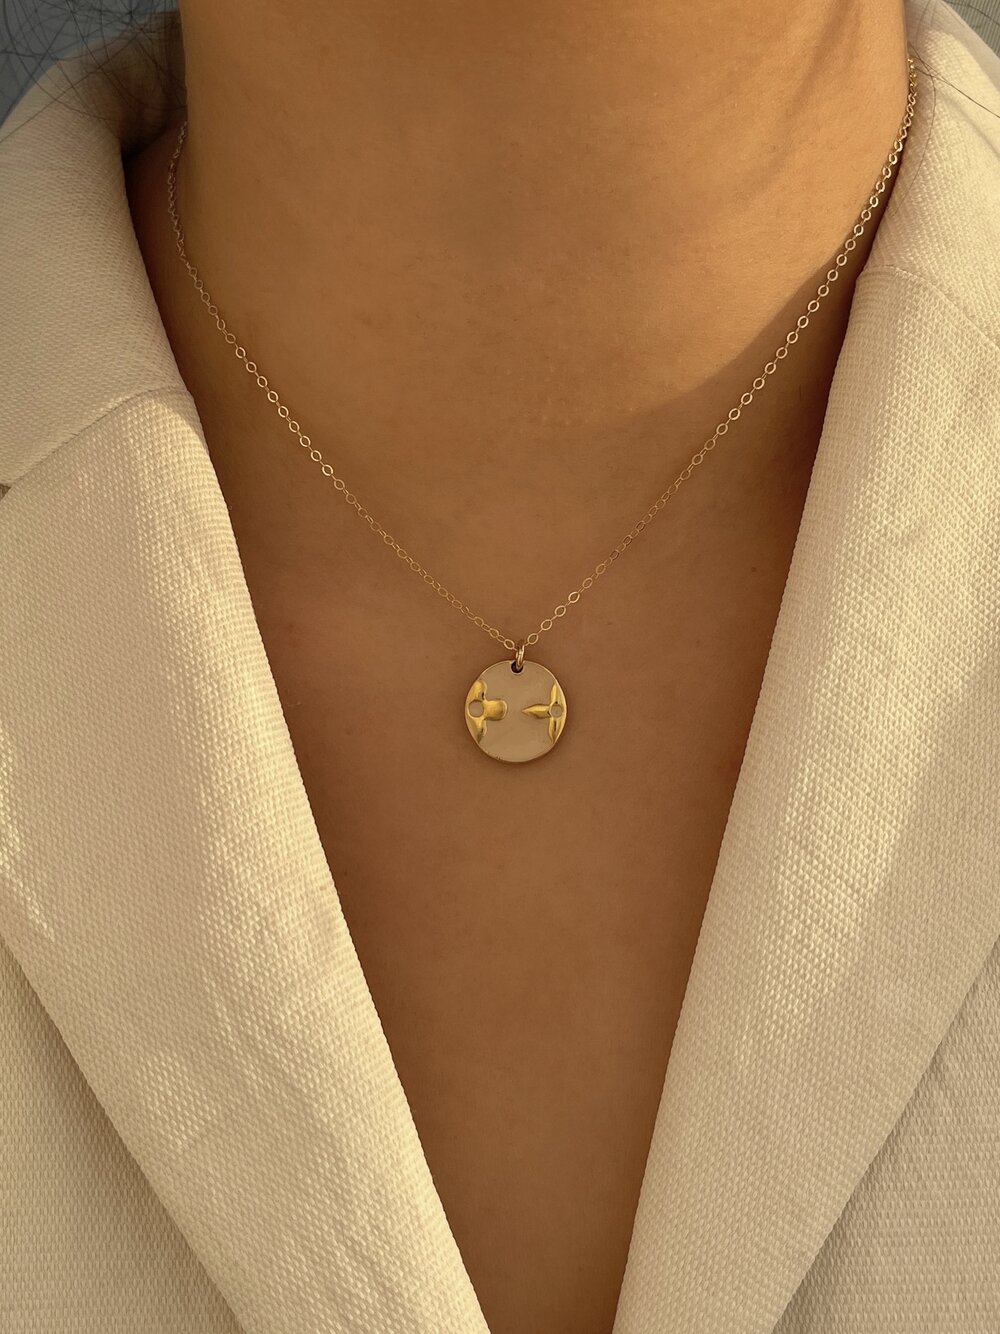 Authentic Louis Vuitton Repurposed Beige Gold Miss LV Necklace